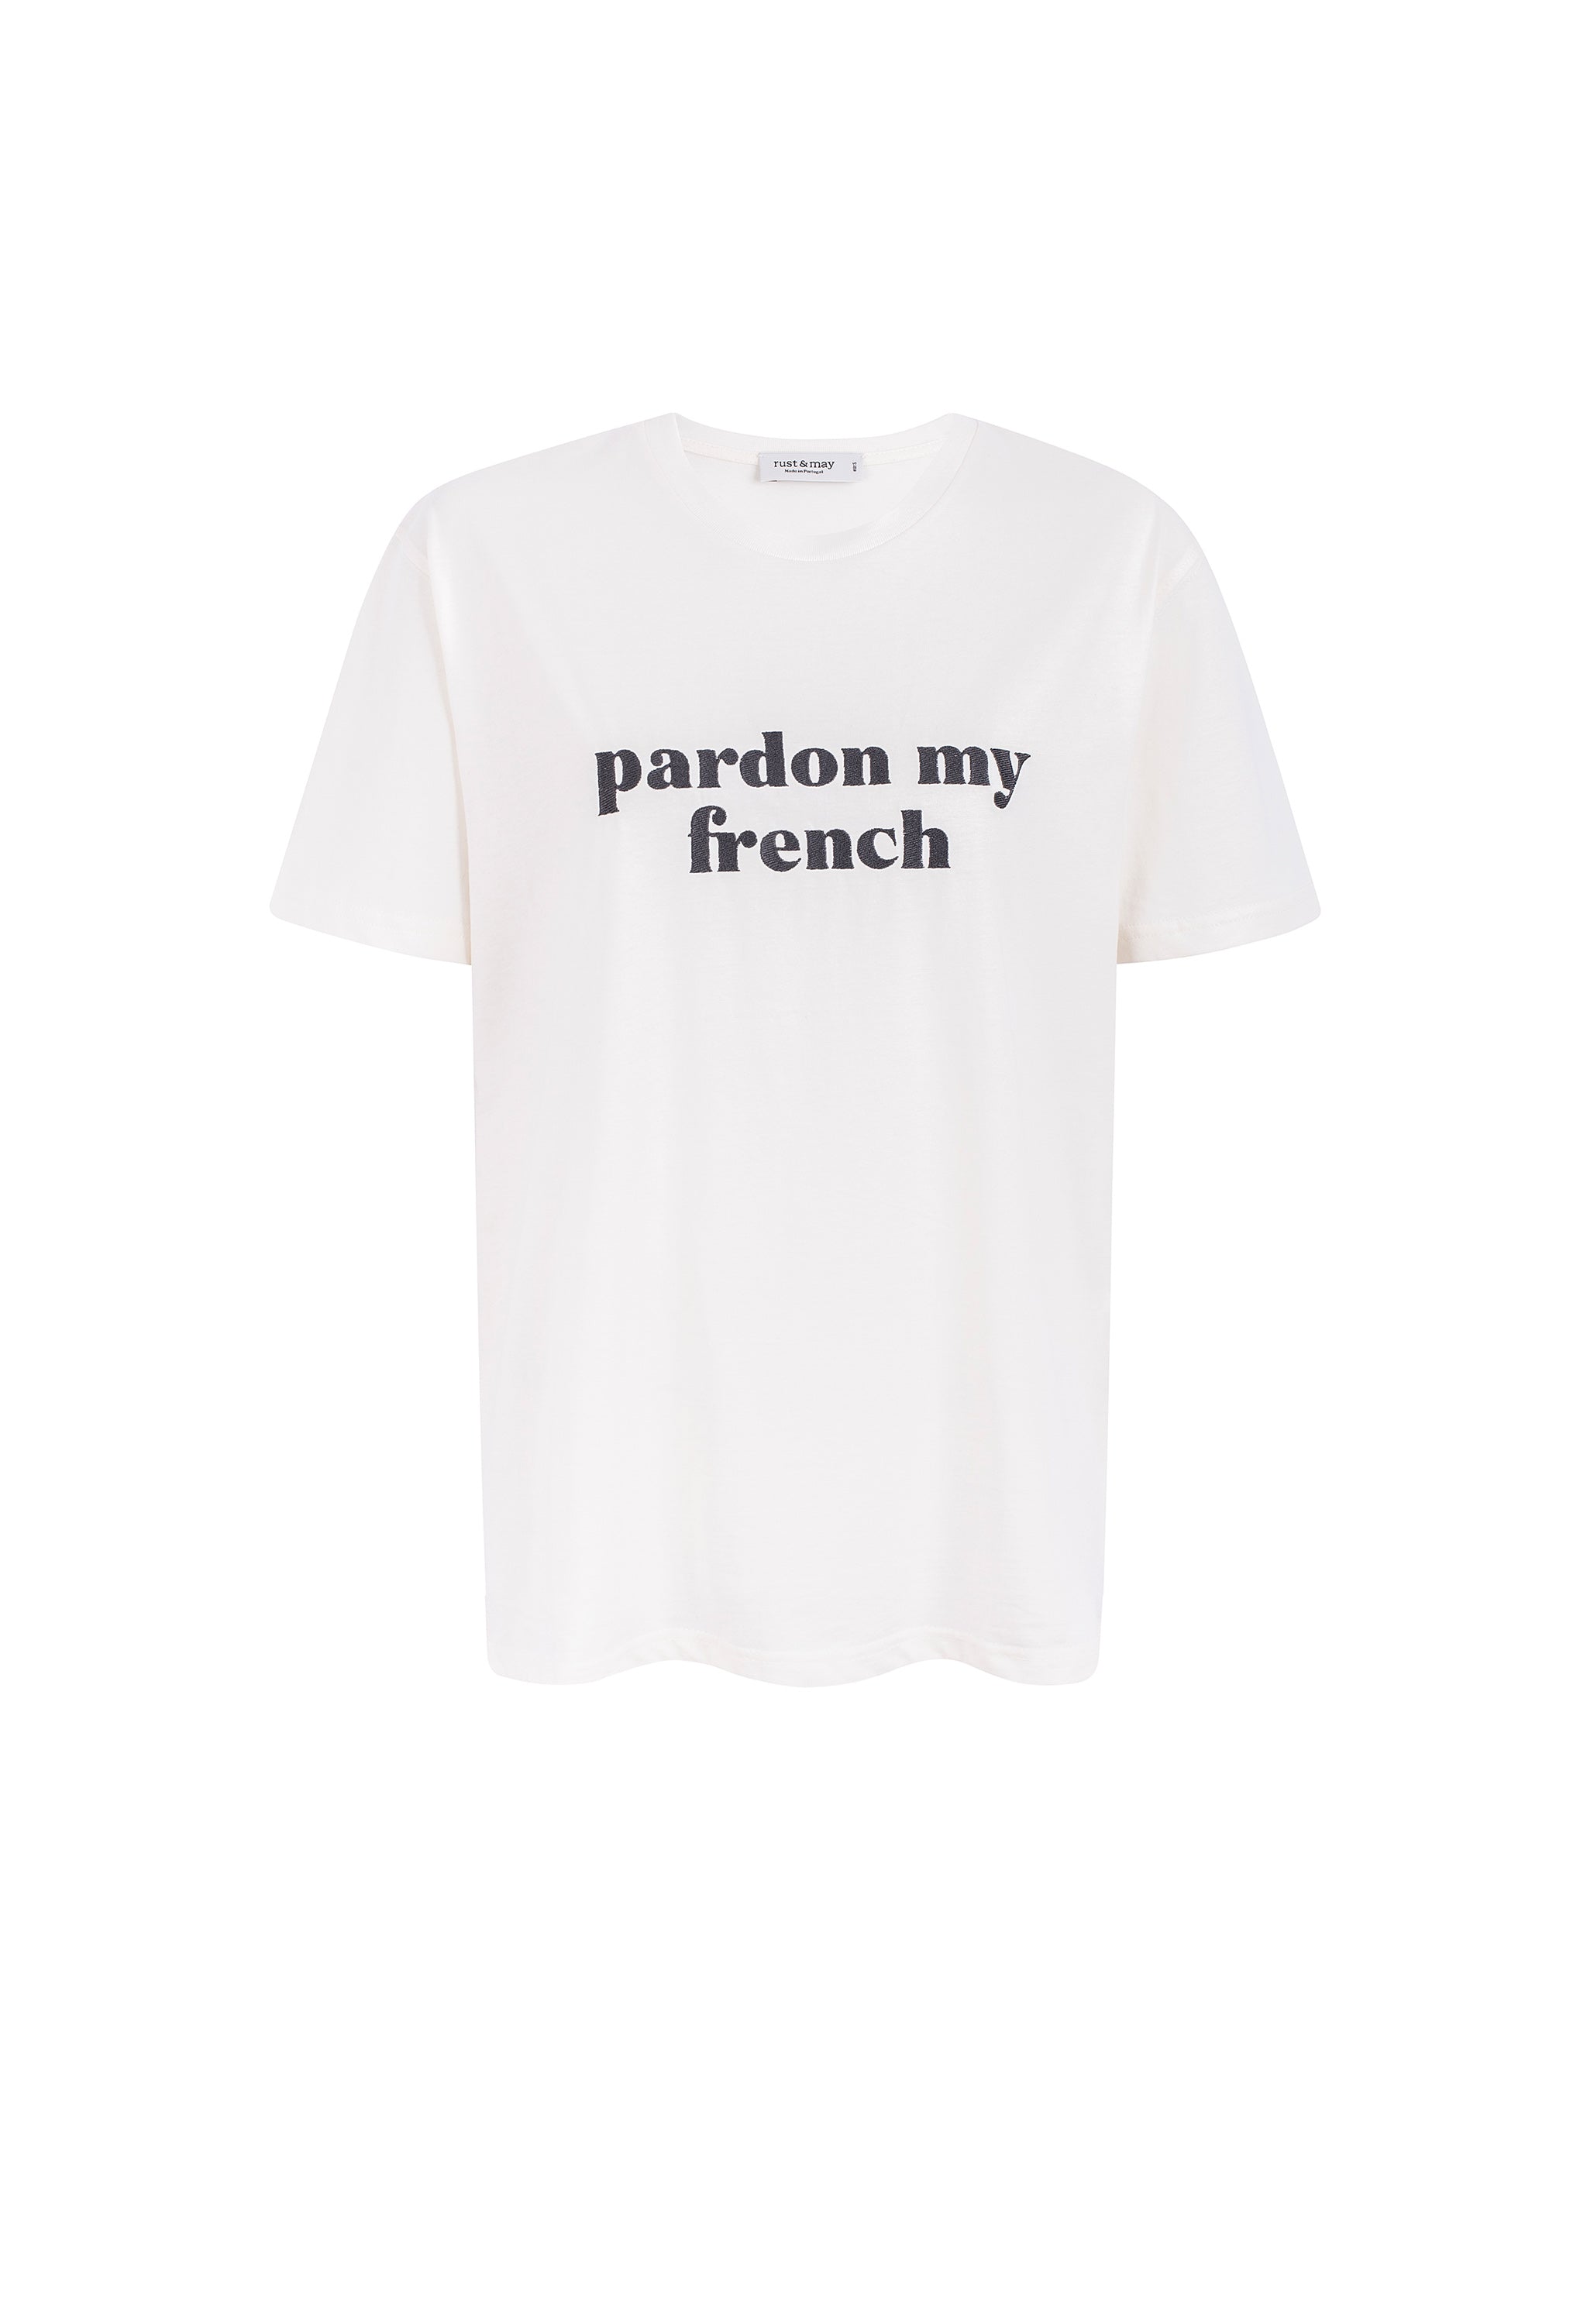 Pardon my French T-shirt